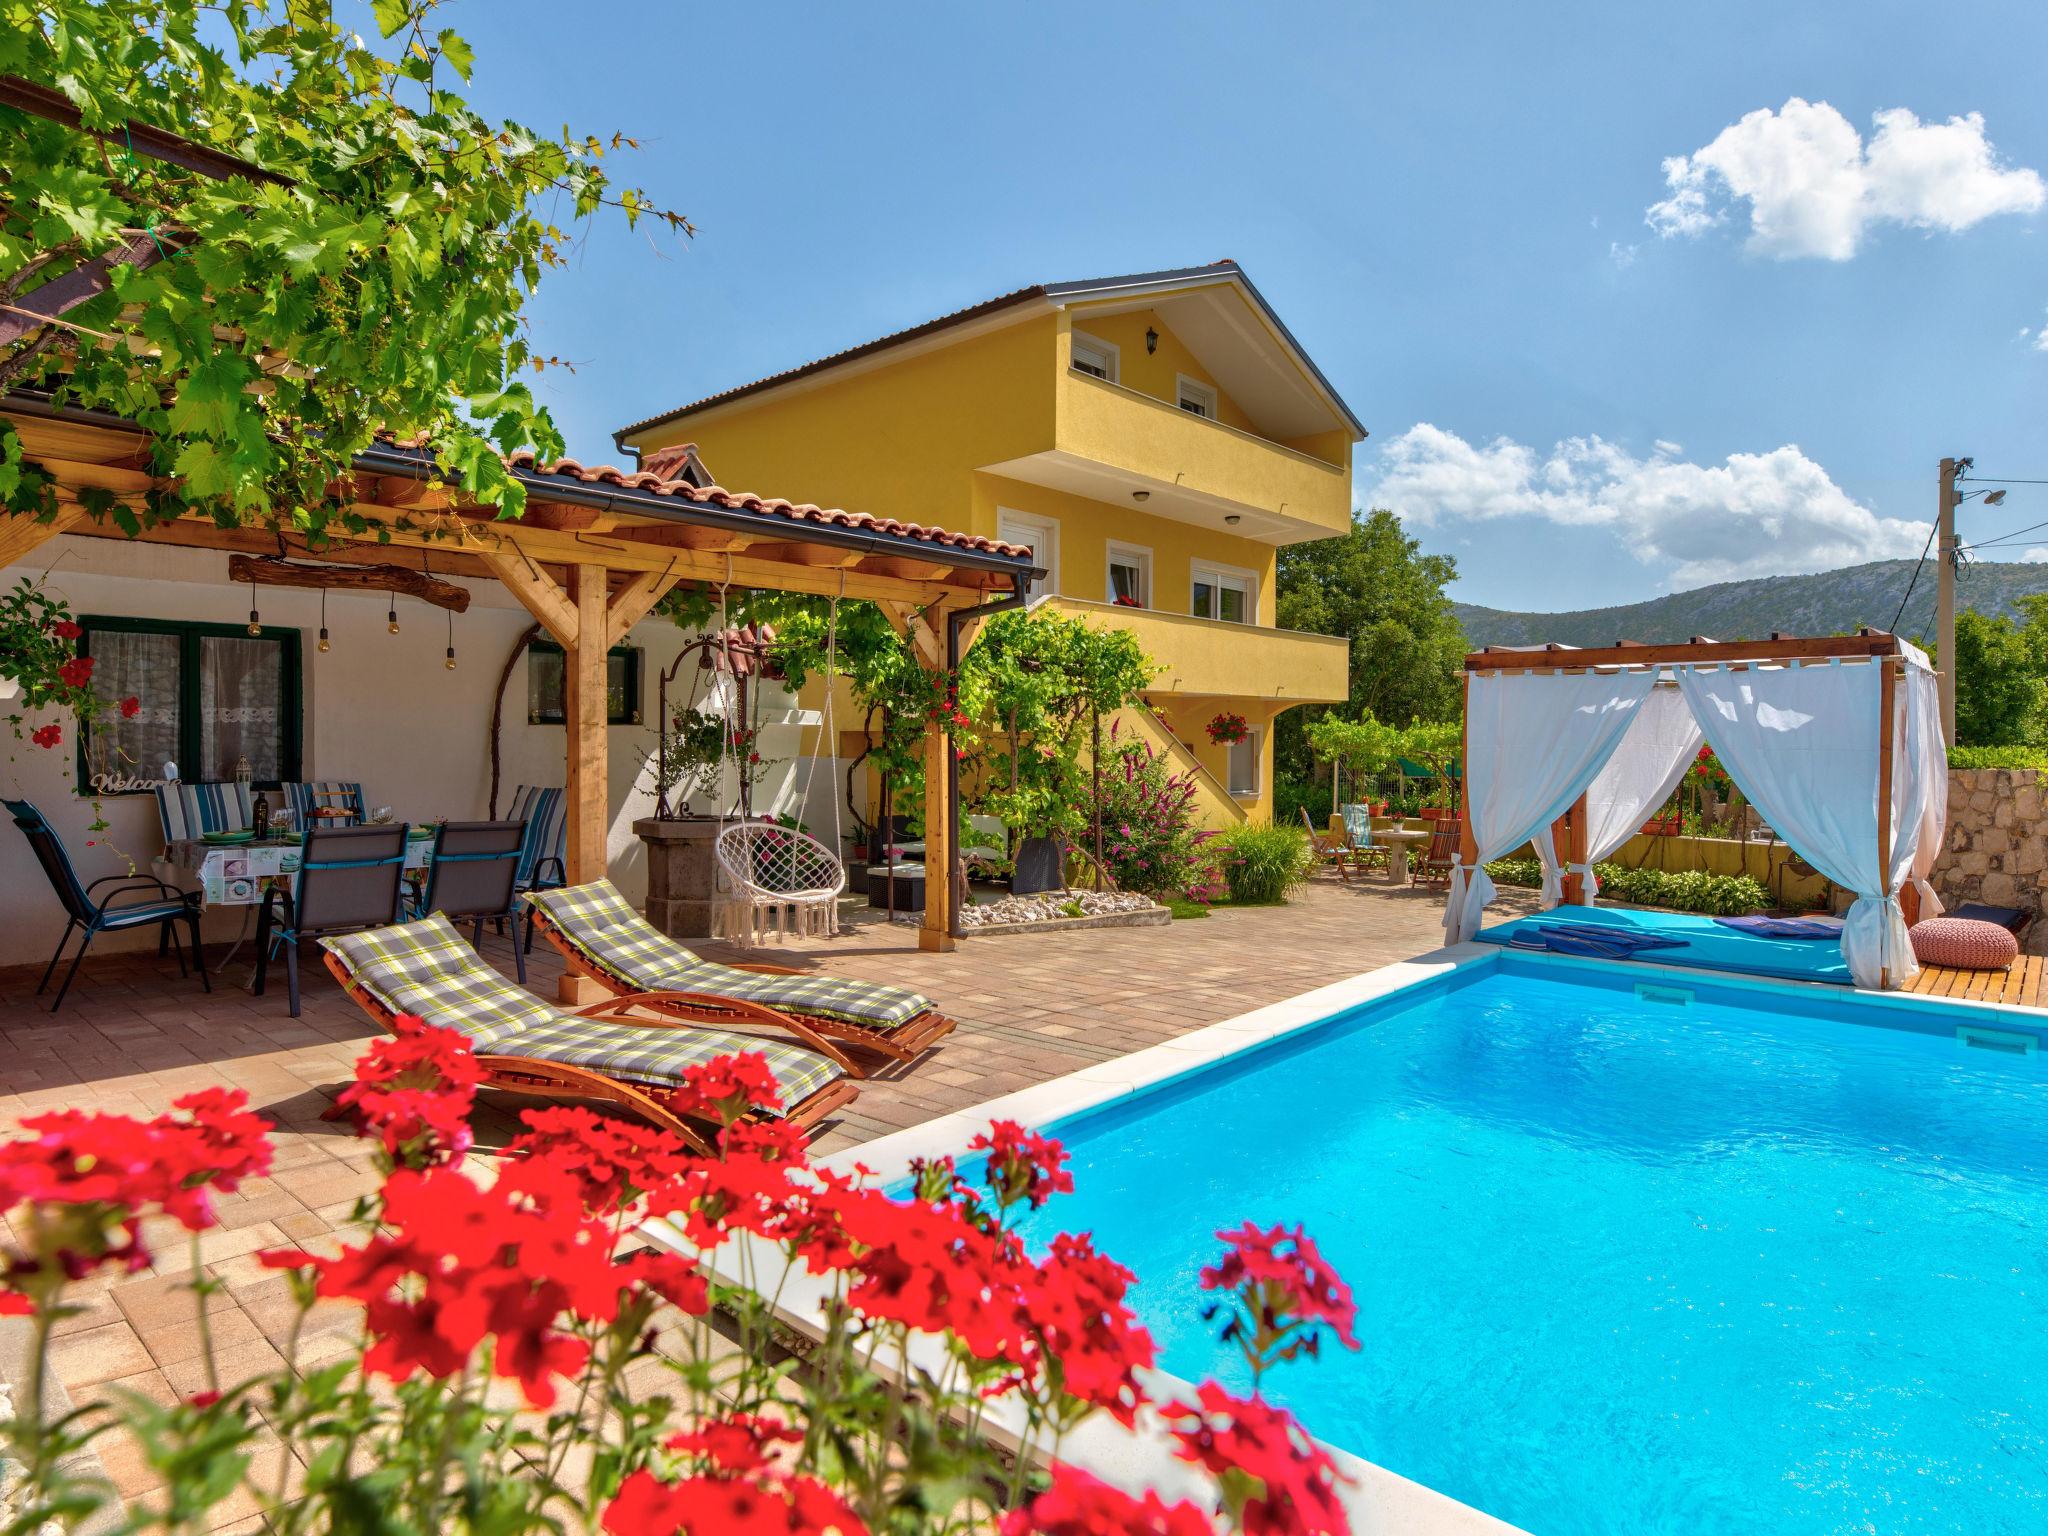 Photo 1 - 3 bedroom House in Vinodolska Općina with private pool and sea view